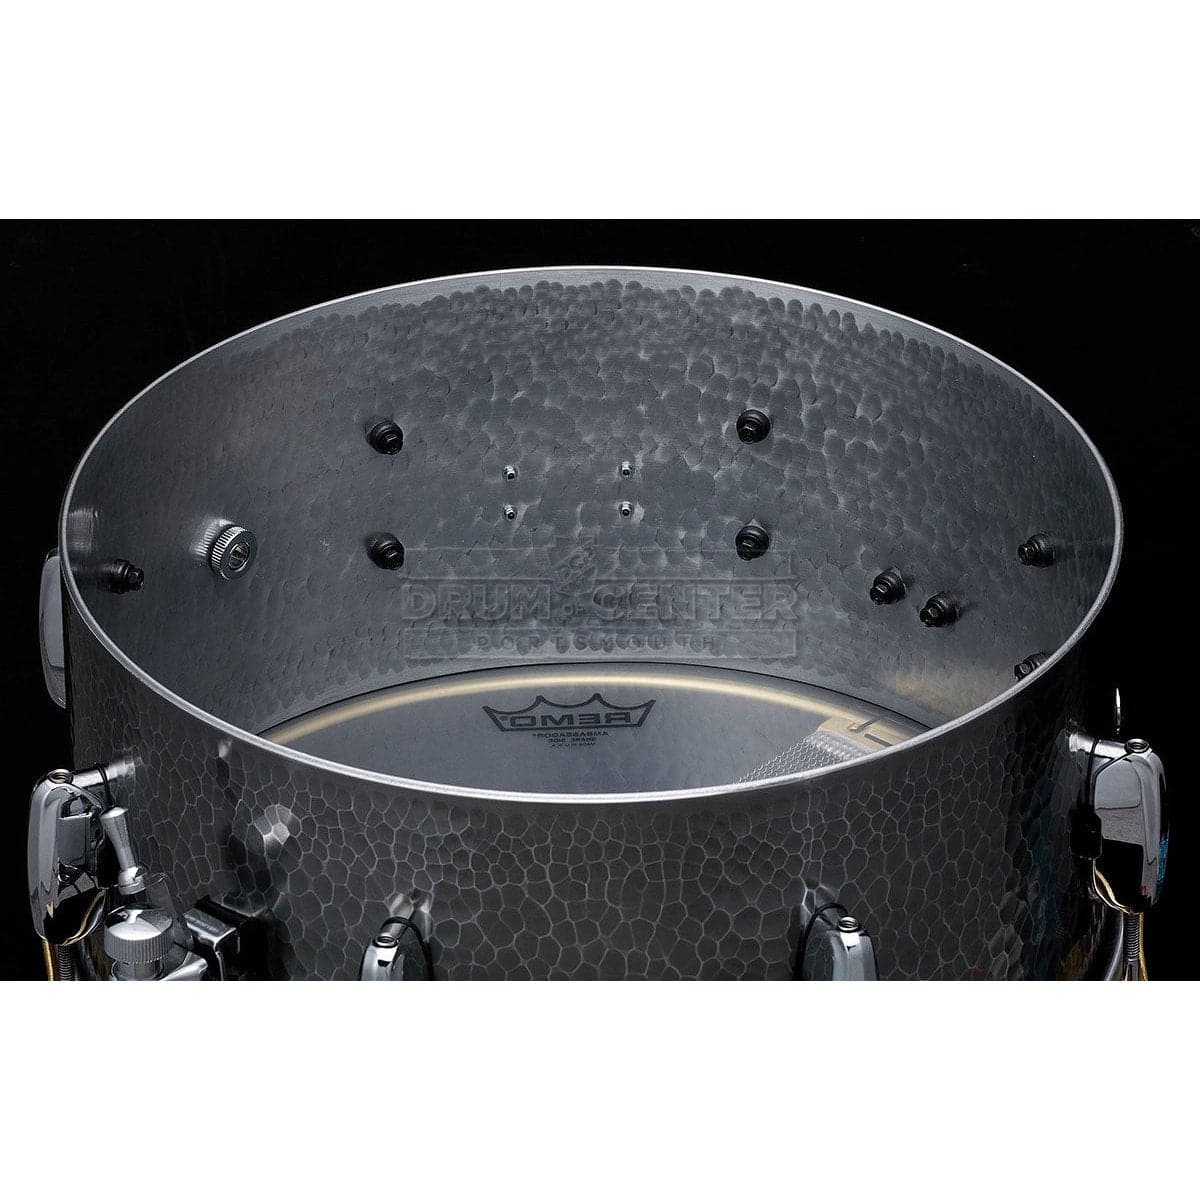 Tama Star Reserve Hand Hammered Aluminum 14x6.5 Snare Drum